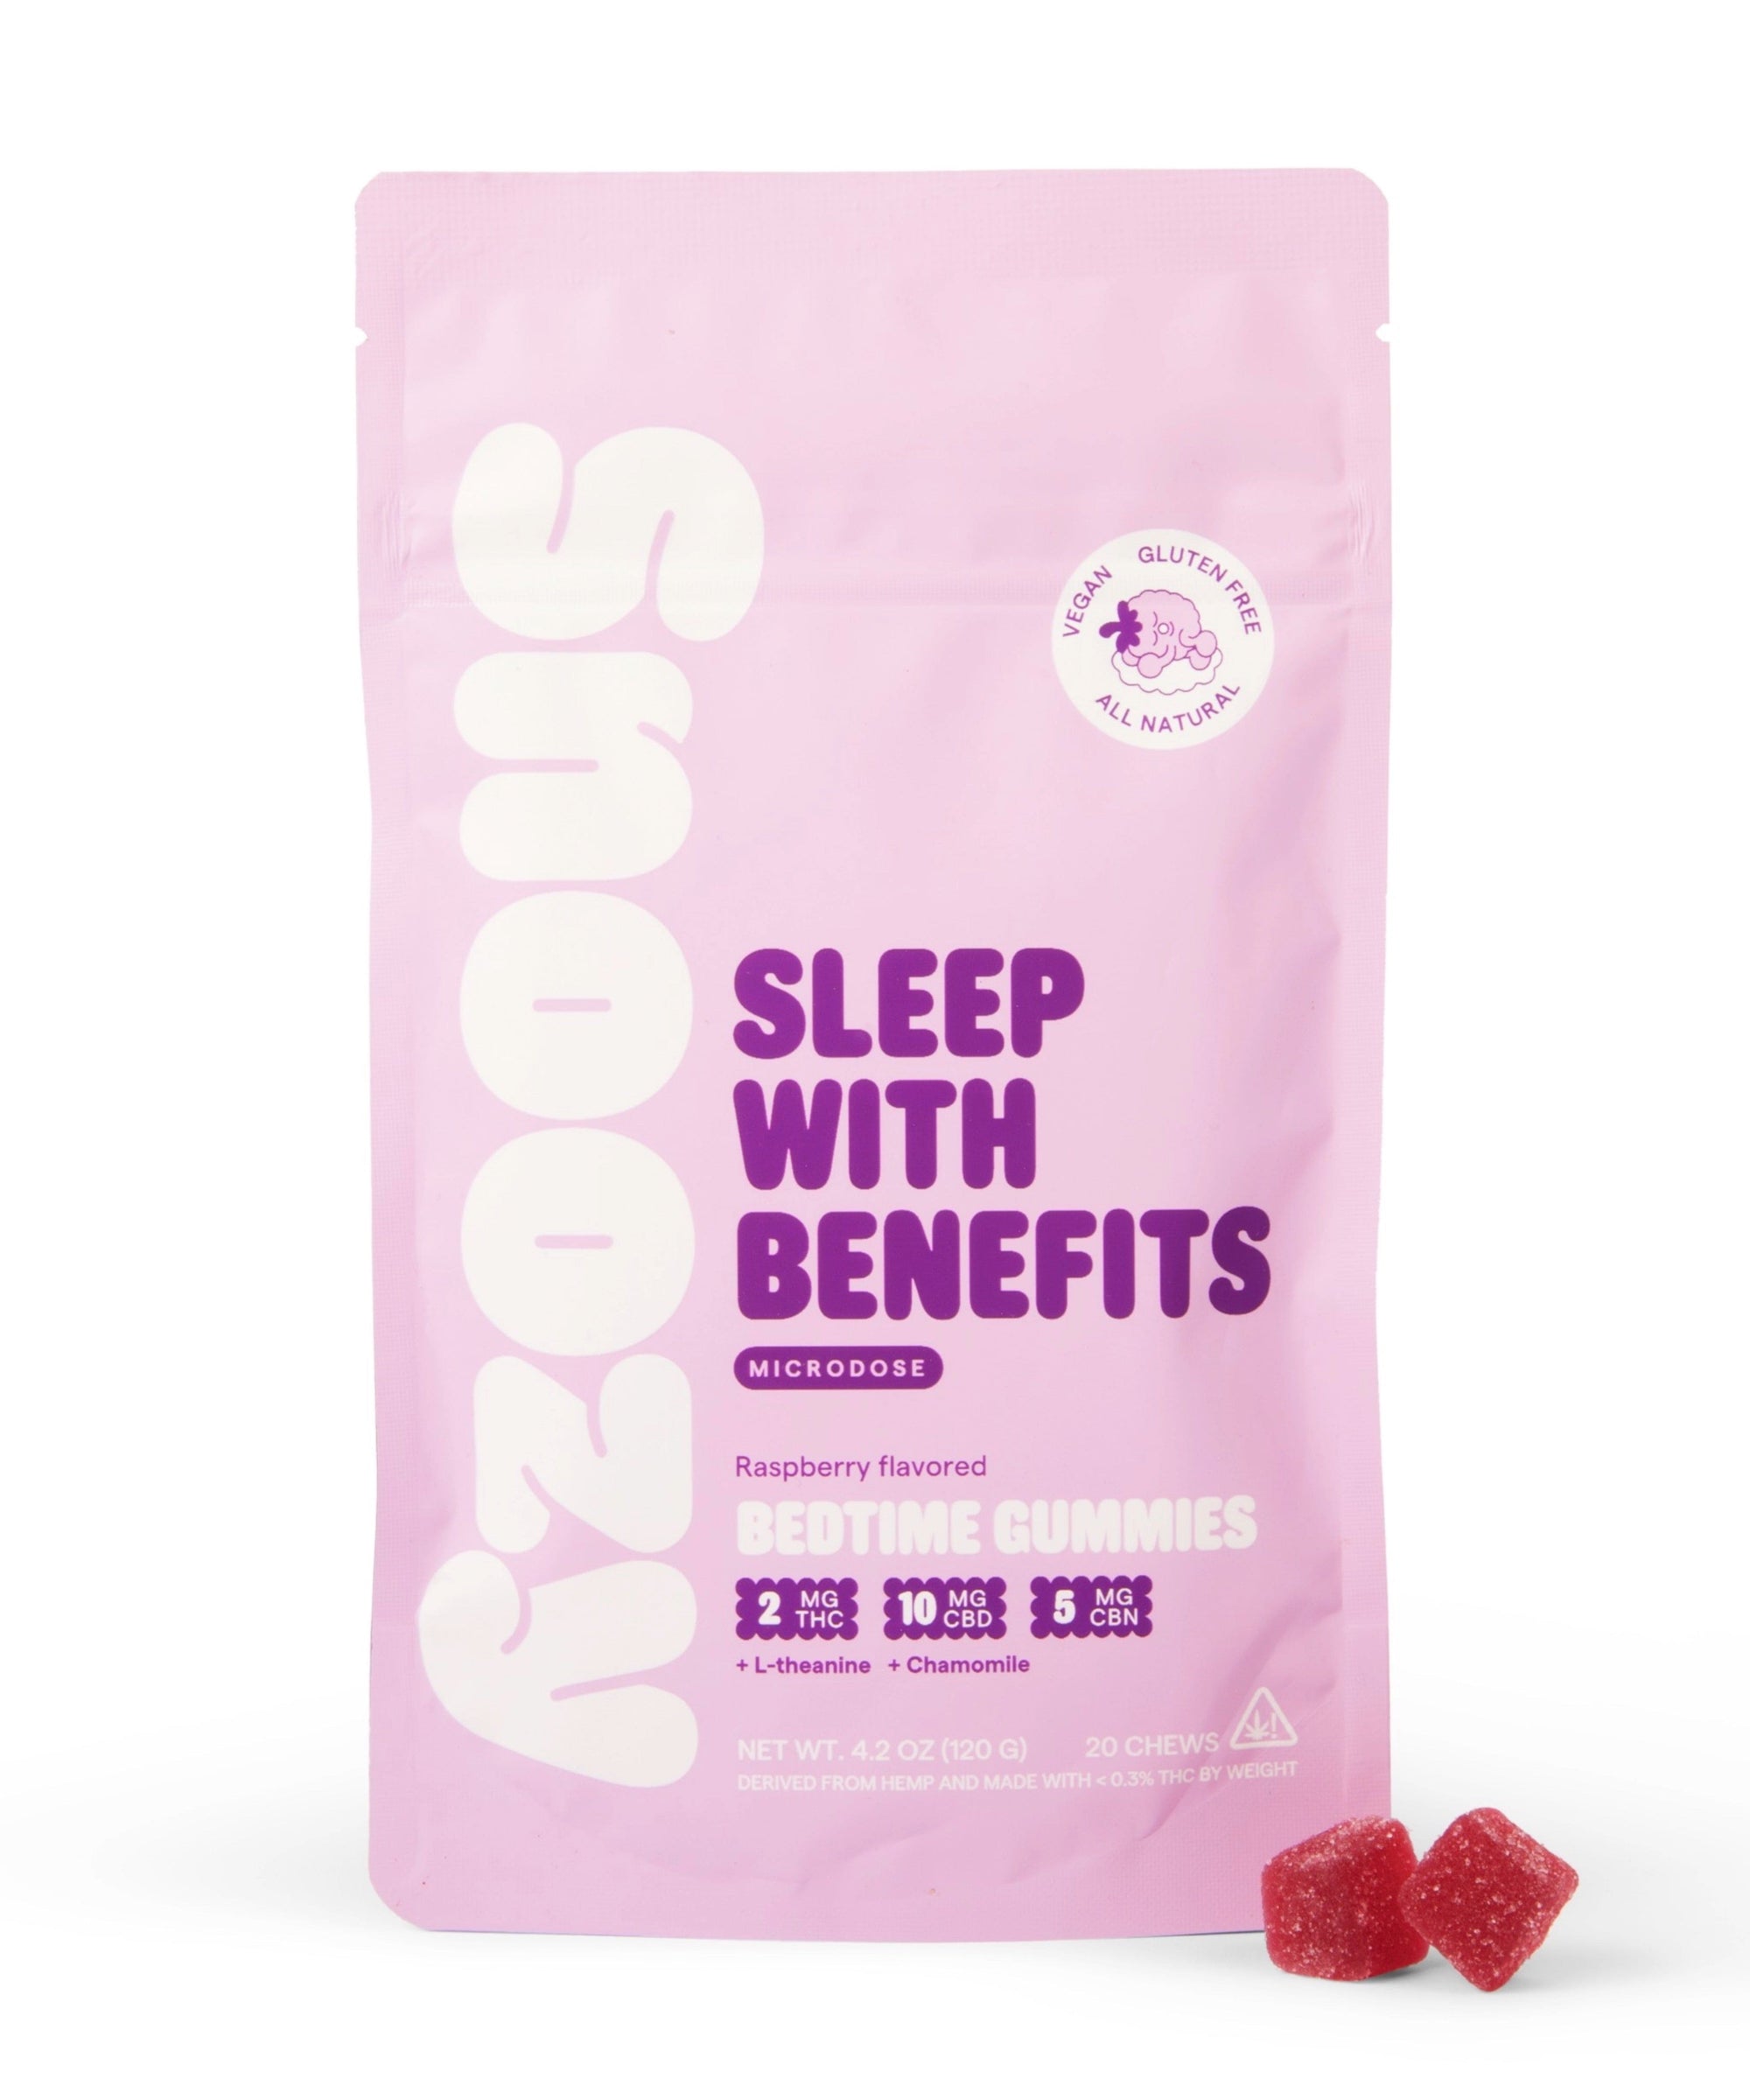 Microdose Sleep With Benefits: Bedtime Gummies